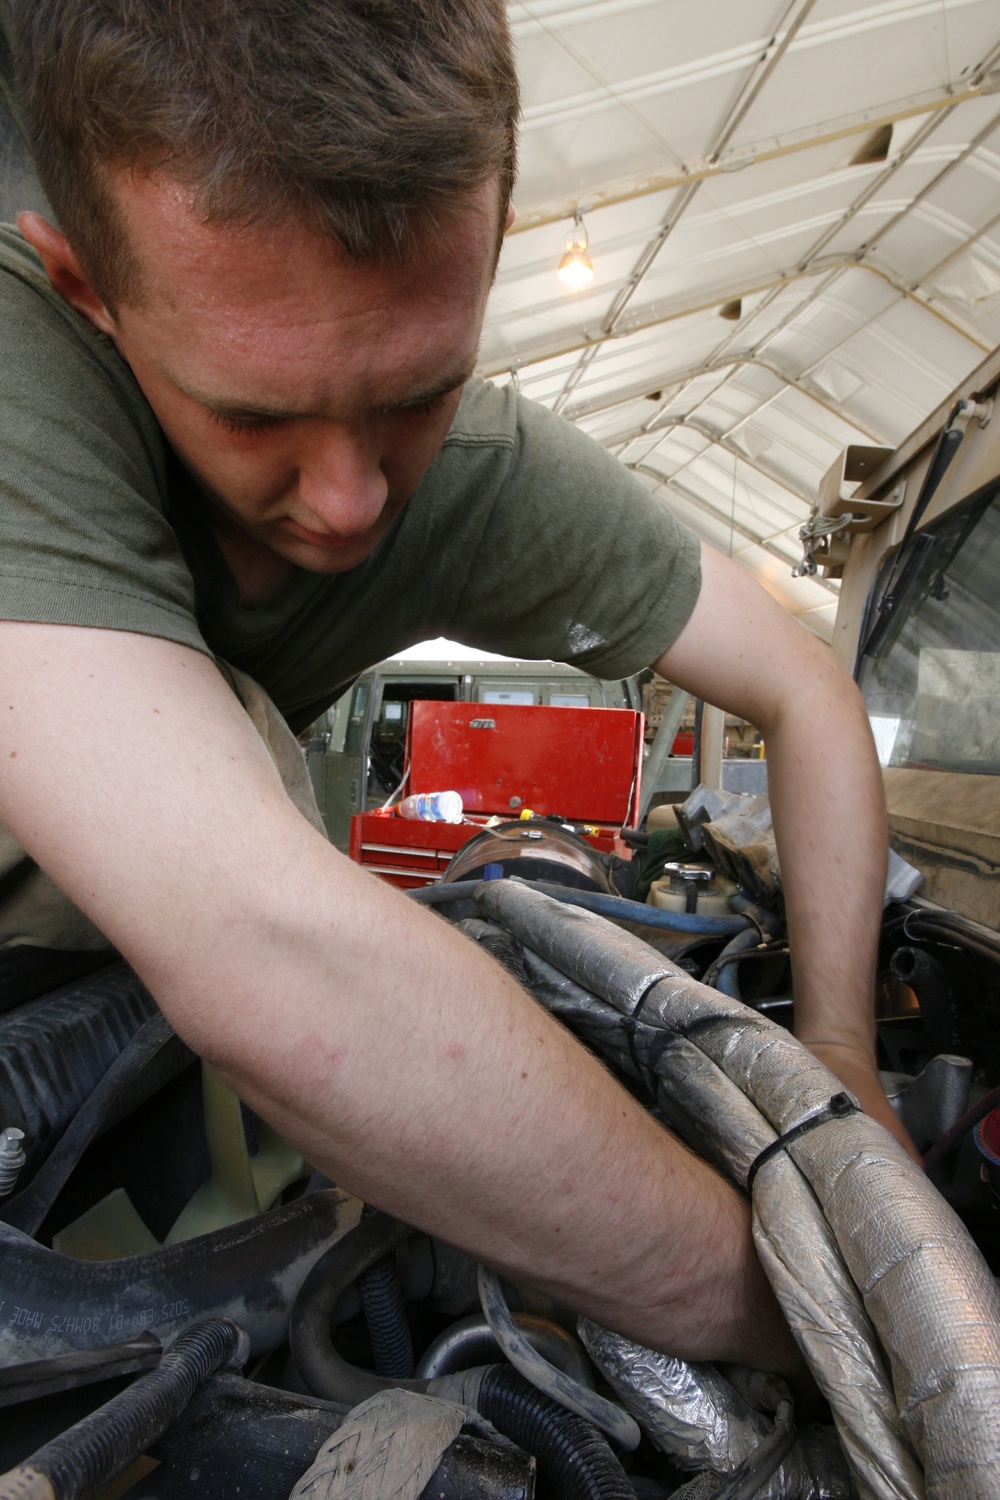 No holiday breaks for Marine mechanics in Iraq